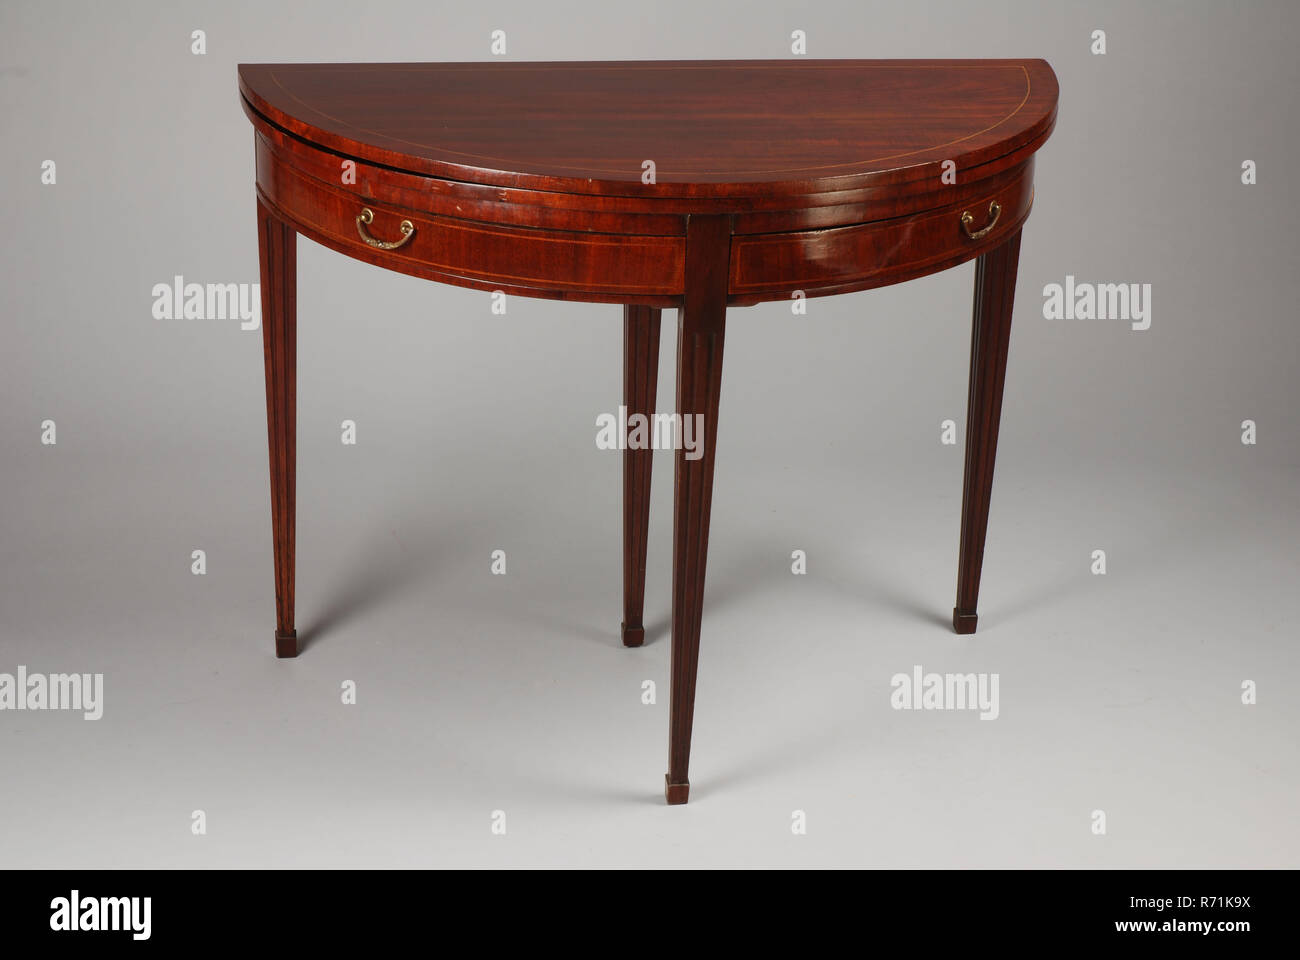 La caoba sofá-Louis apoderarse de media luna mesa, mesa de juego mesa  plegable mesa diseño interior de muebles de caoba de madera de roble, latón  desplegada 94.0 Caoba sofá-Louis apoderarse de media